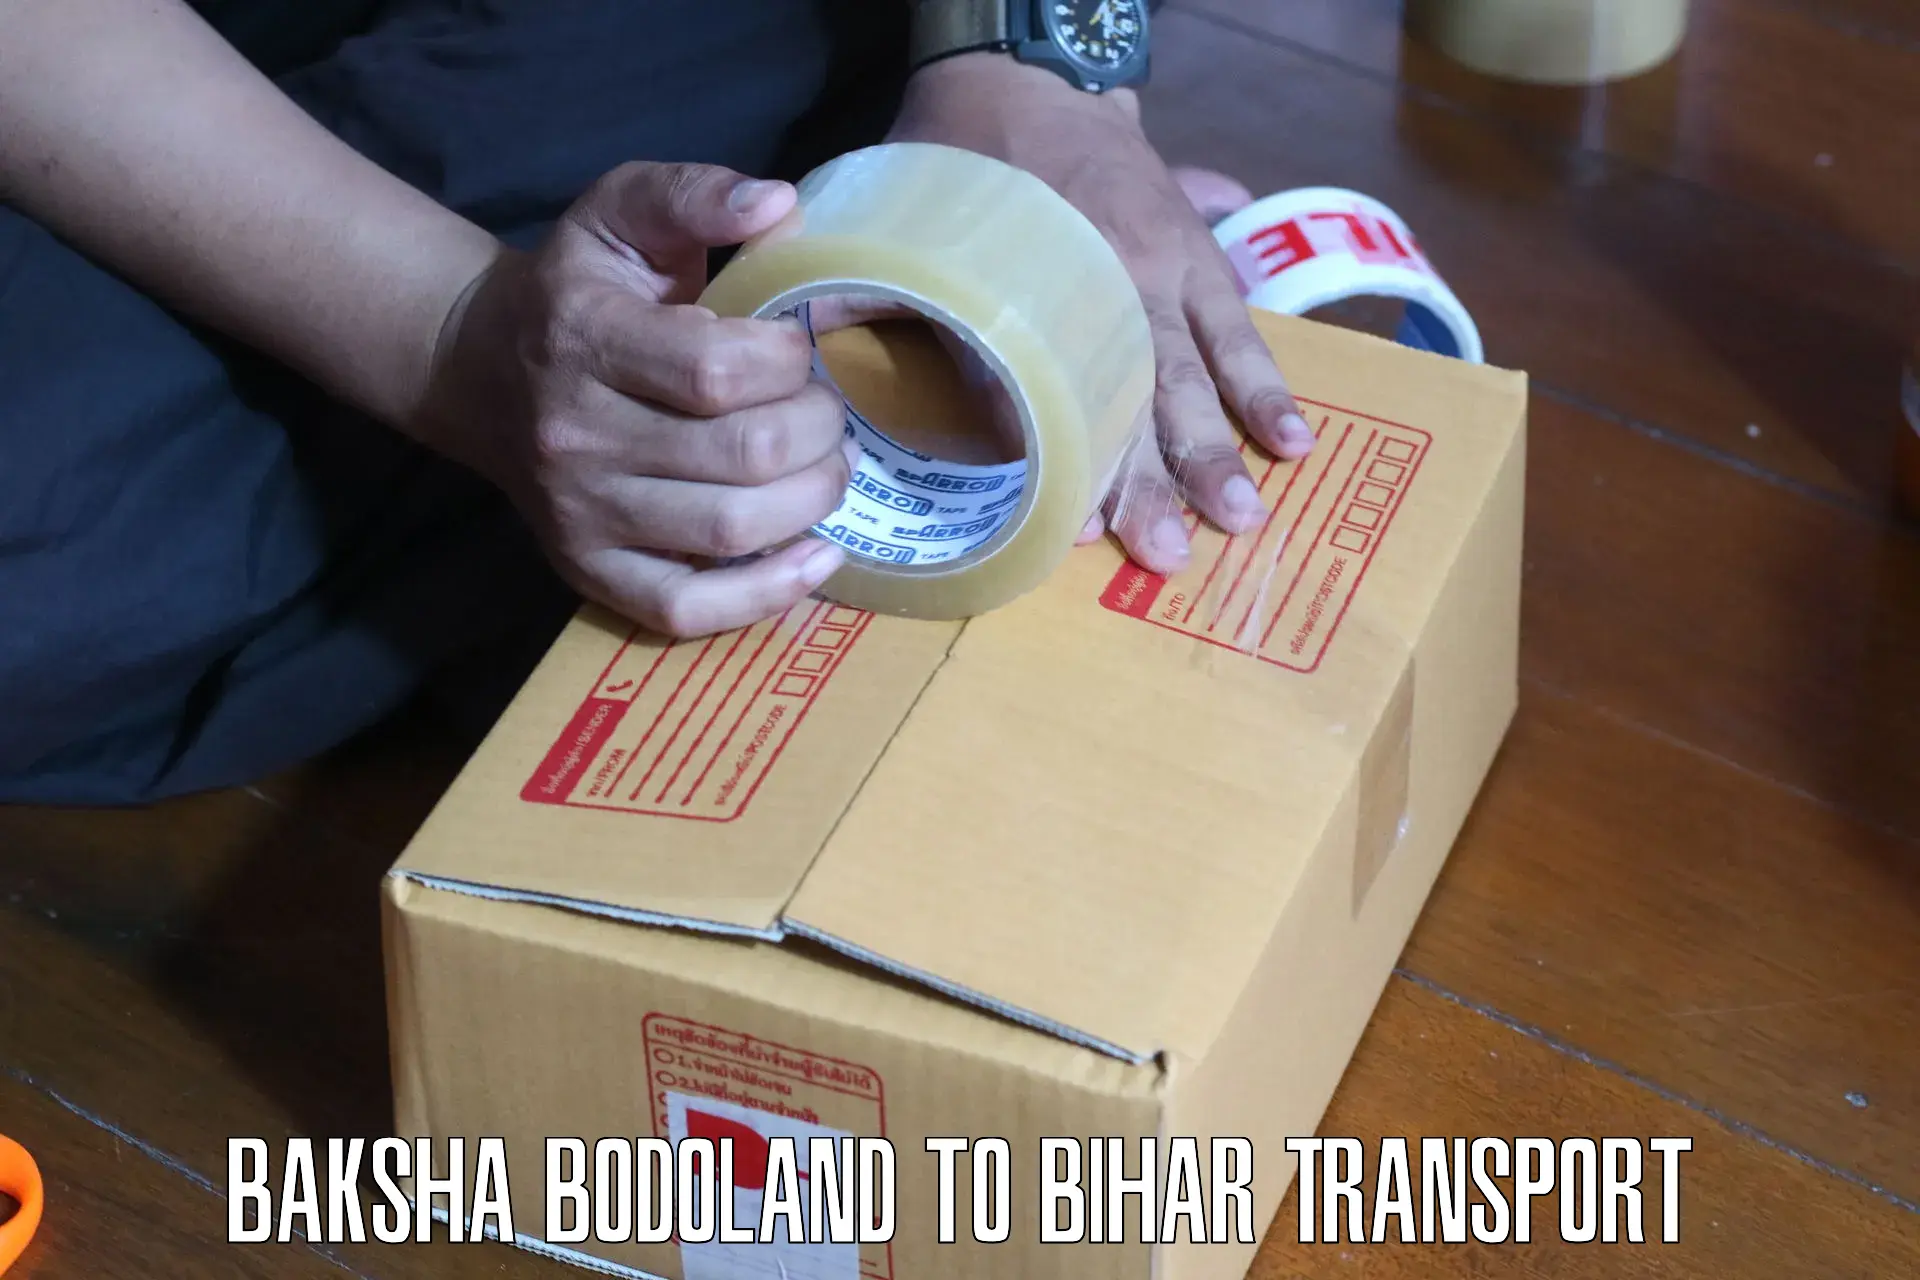 Furniture transport service Baksha Bodoland to Minapur